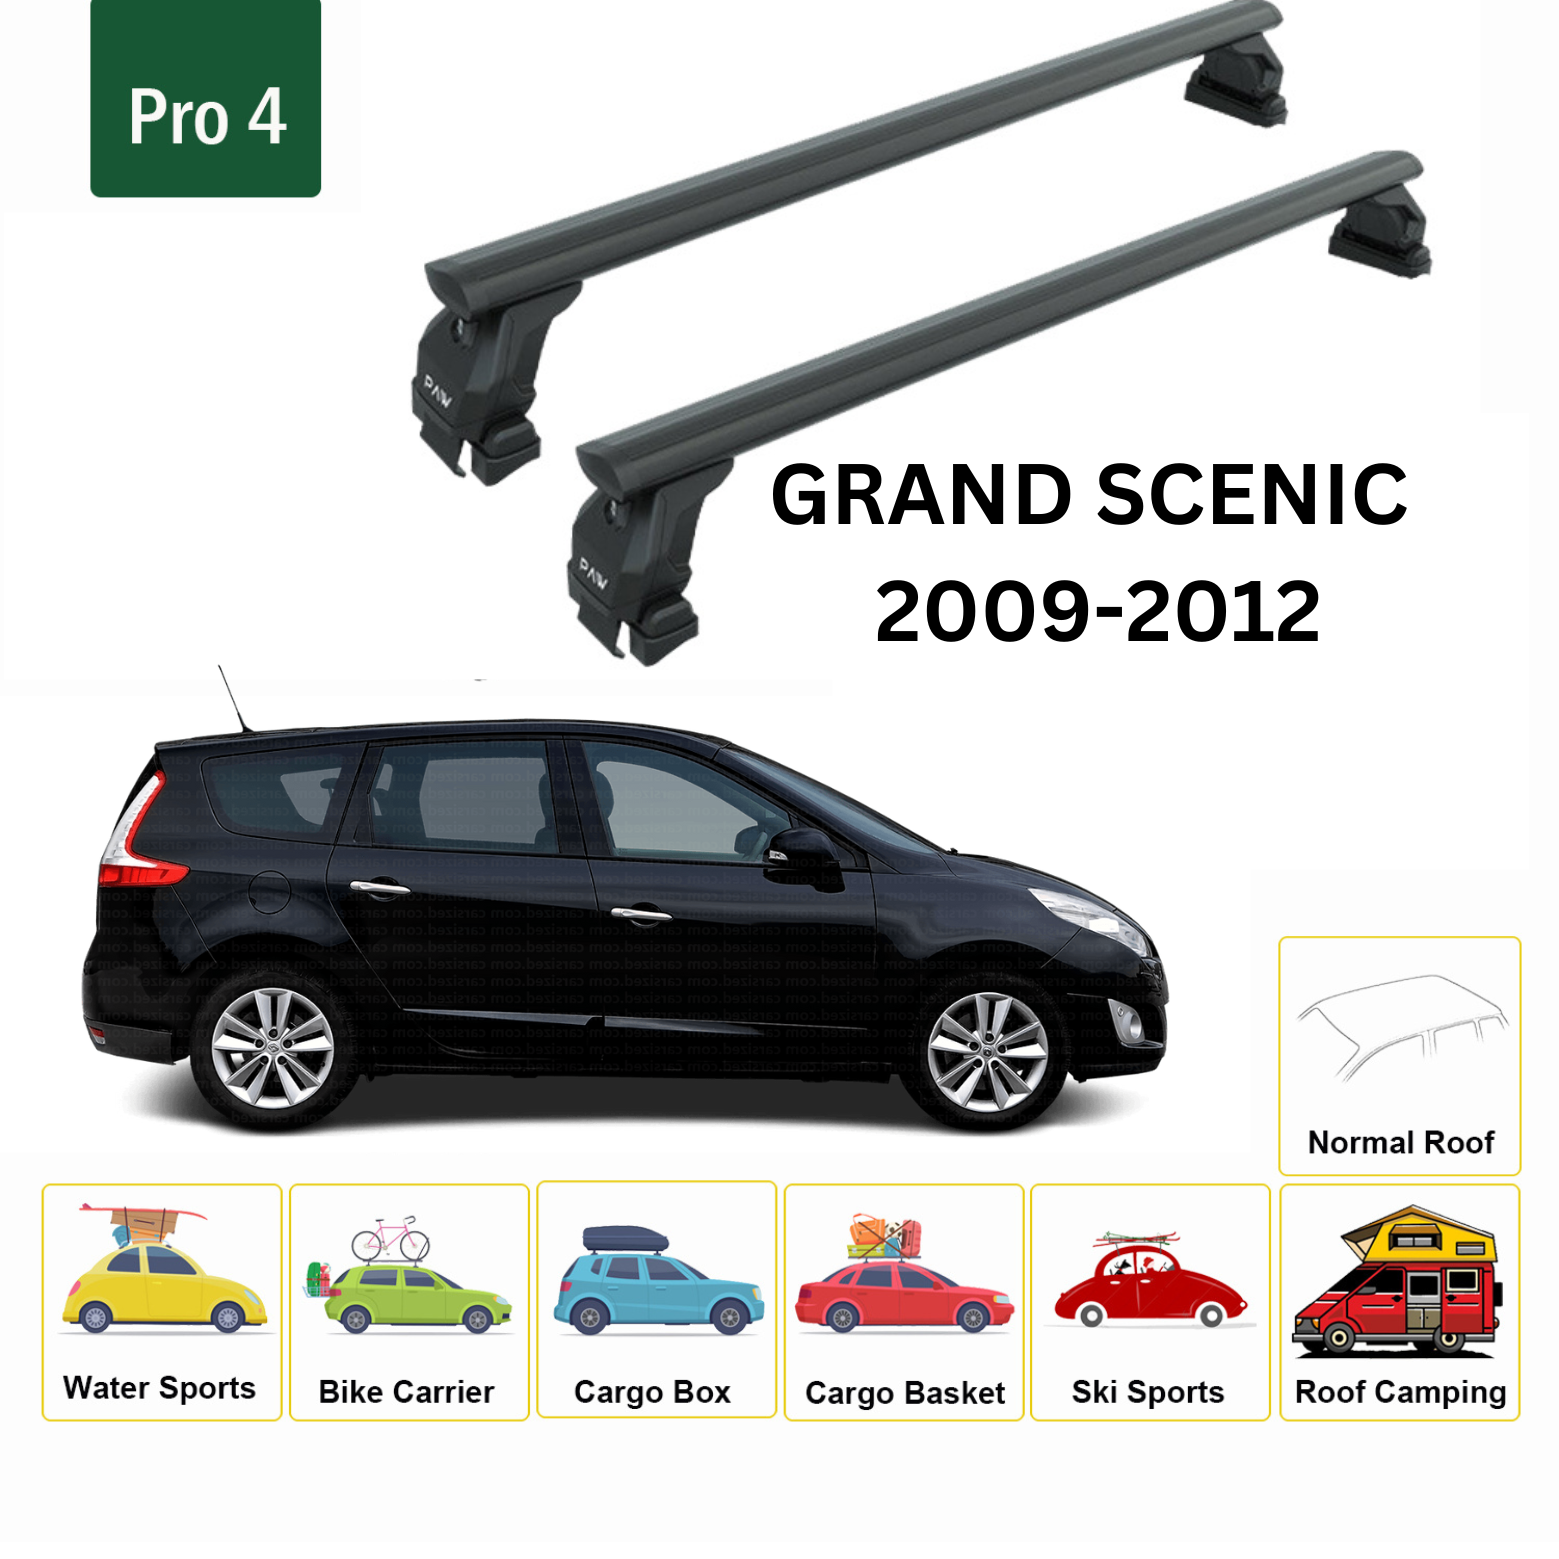 For Renault Grand Scenic 2009-2012 Roof Rack System, Aluminium Cross Bar, Metal Bracket, Normal Roof, Black